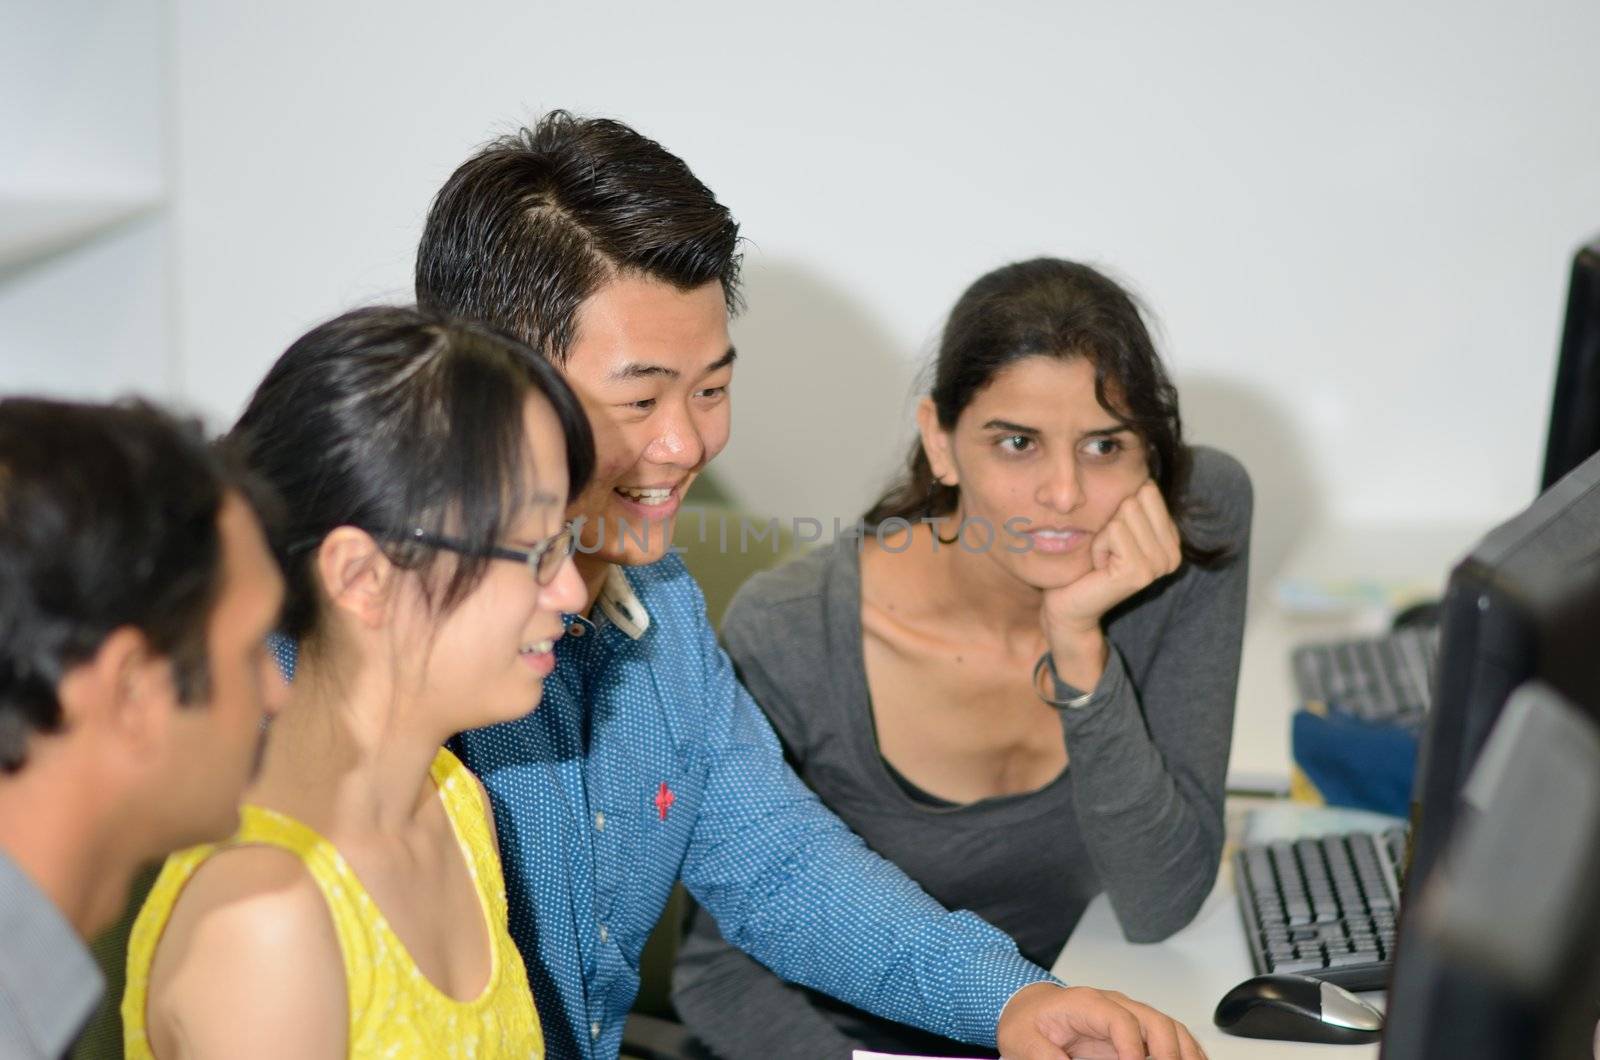 The computing team by ianmck